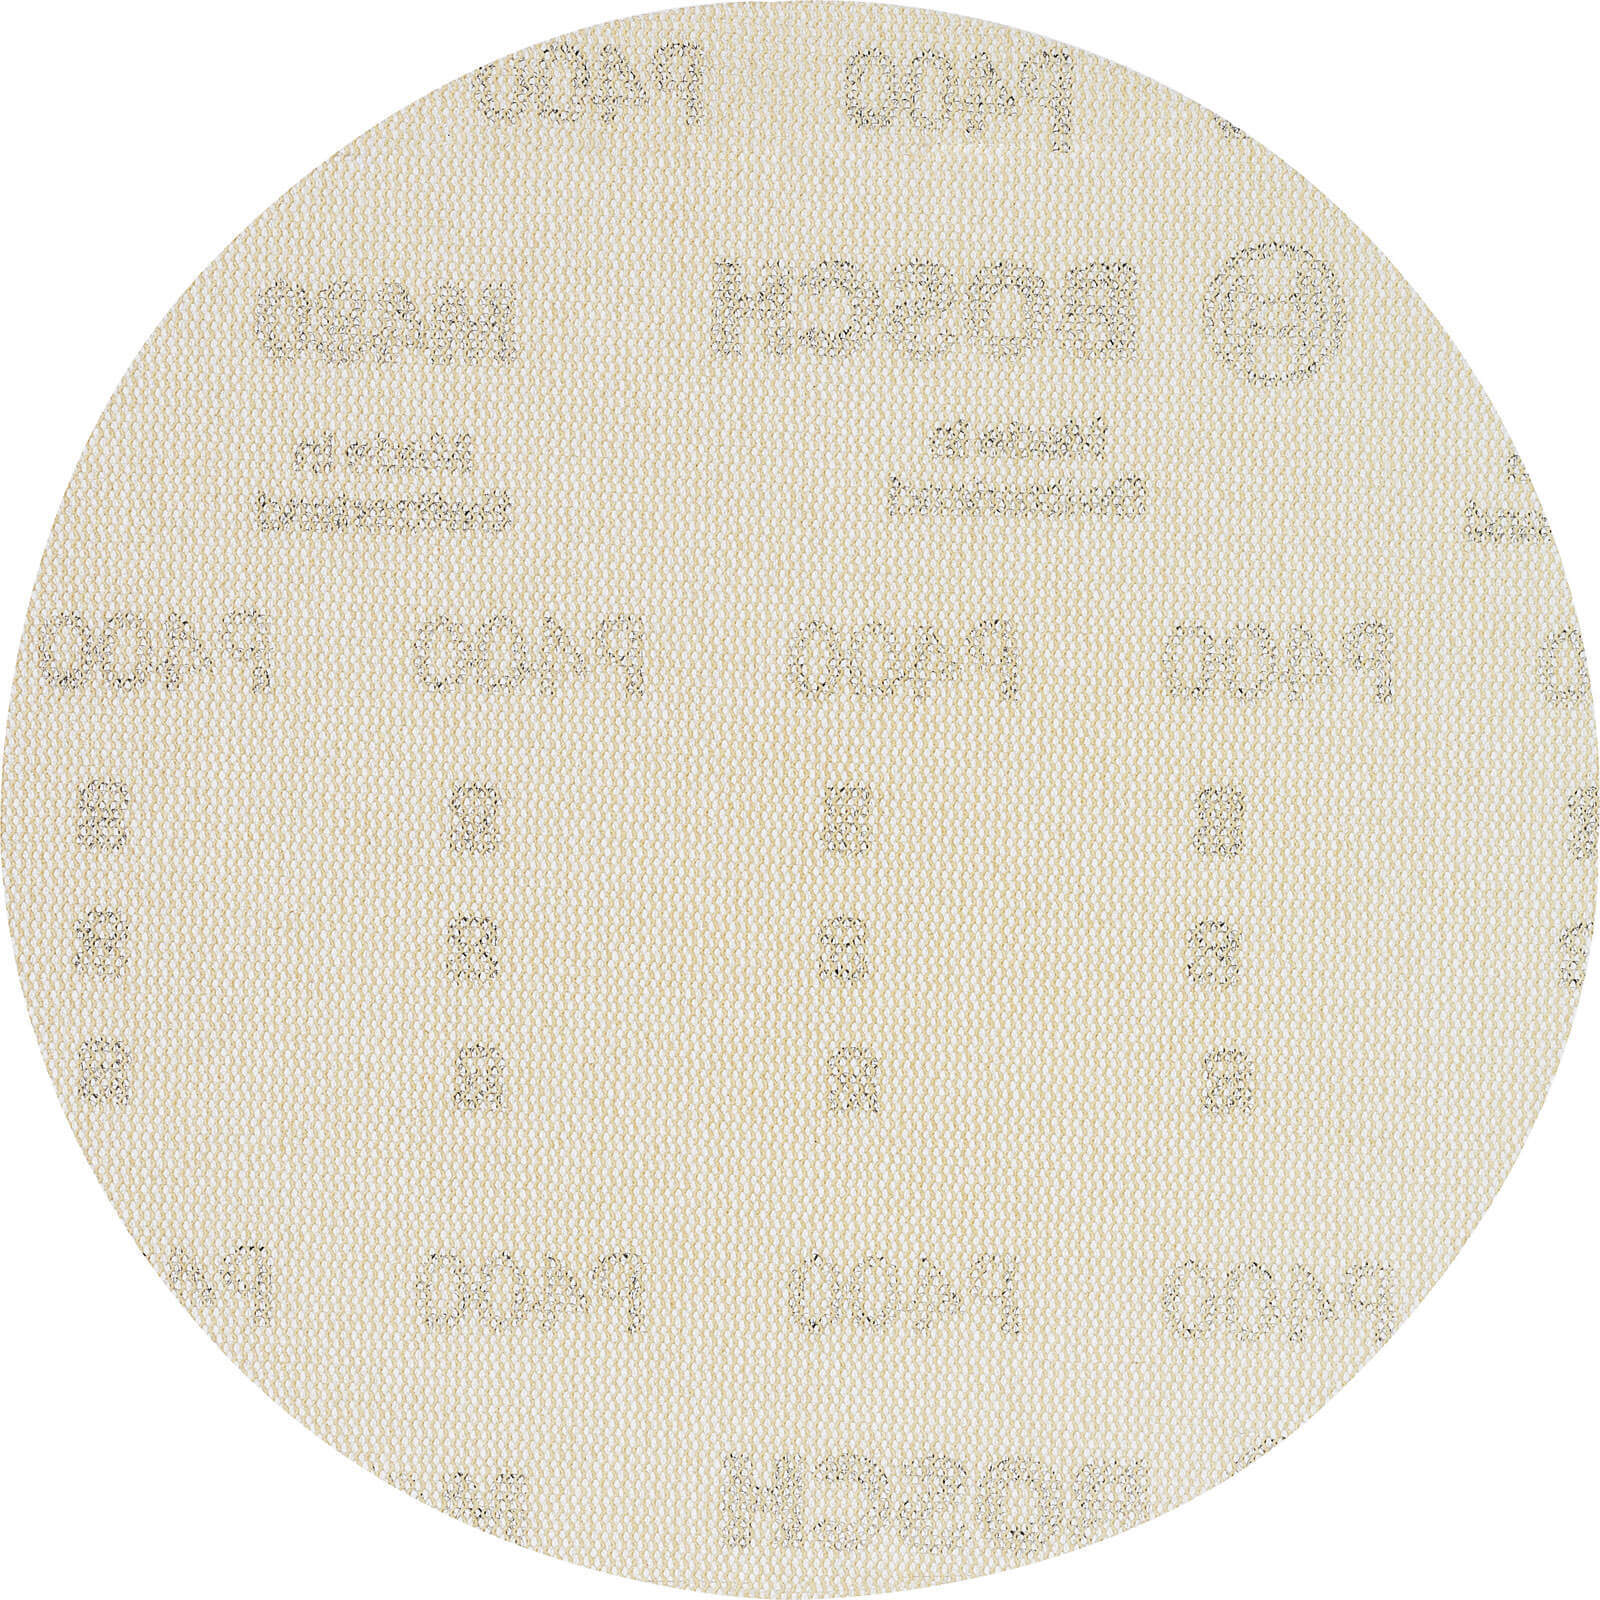 Photo of Bosch M480 150mm Net Abrasive Sanding Disc 150mm 400g Pack Of 5